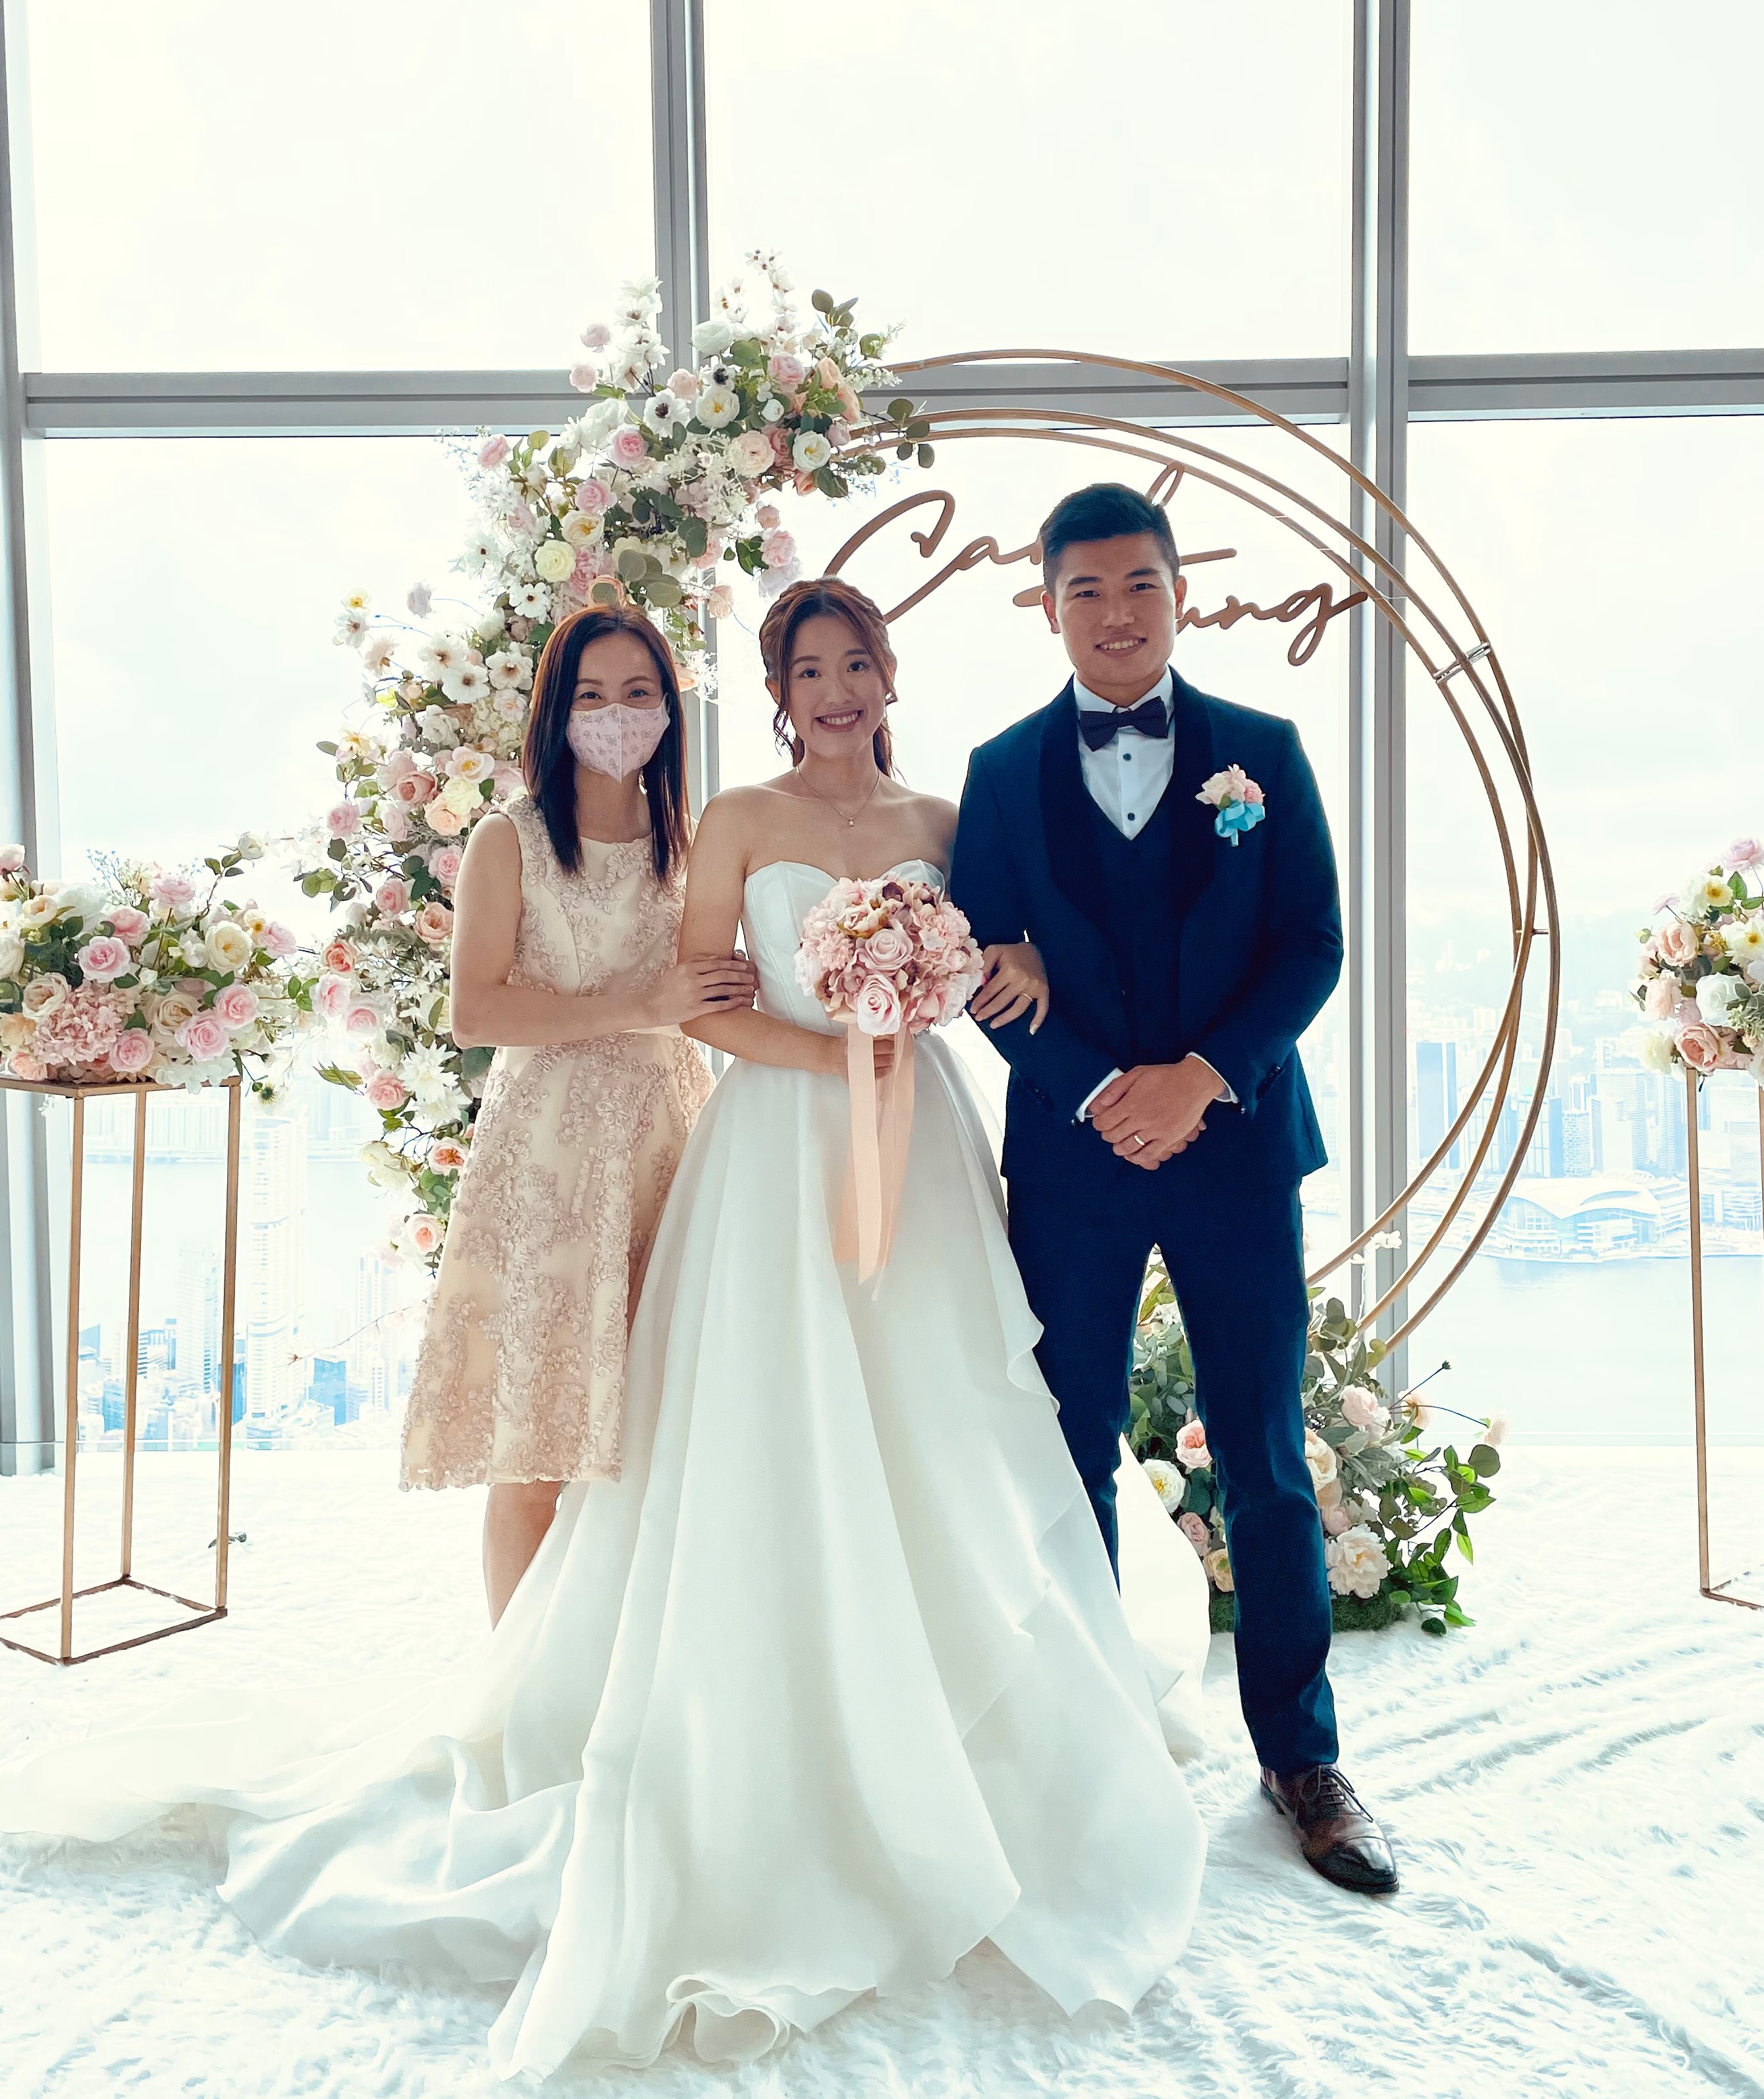 Bless Wedding 首席婚禮統籌及司儀 Angel Leung婚禮統籌師工作紀錄: 西式婚禮統籌 - 半日婚禮統籌 + 婚禮司儀 Wedding Planner & Wedding MC @Sky100